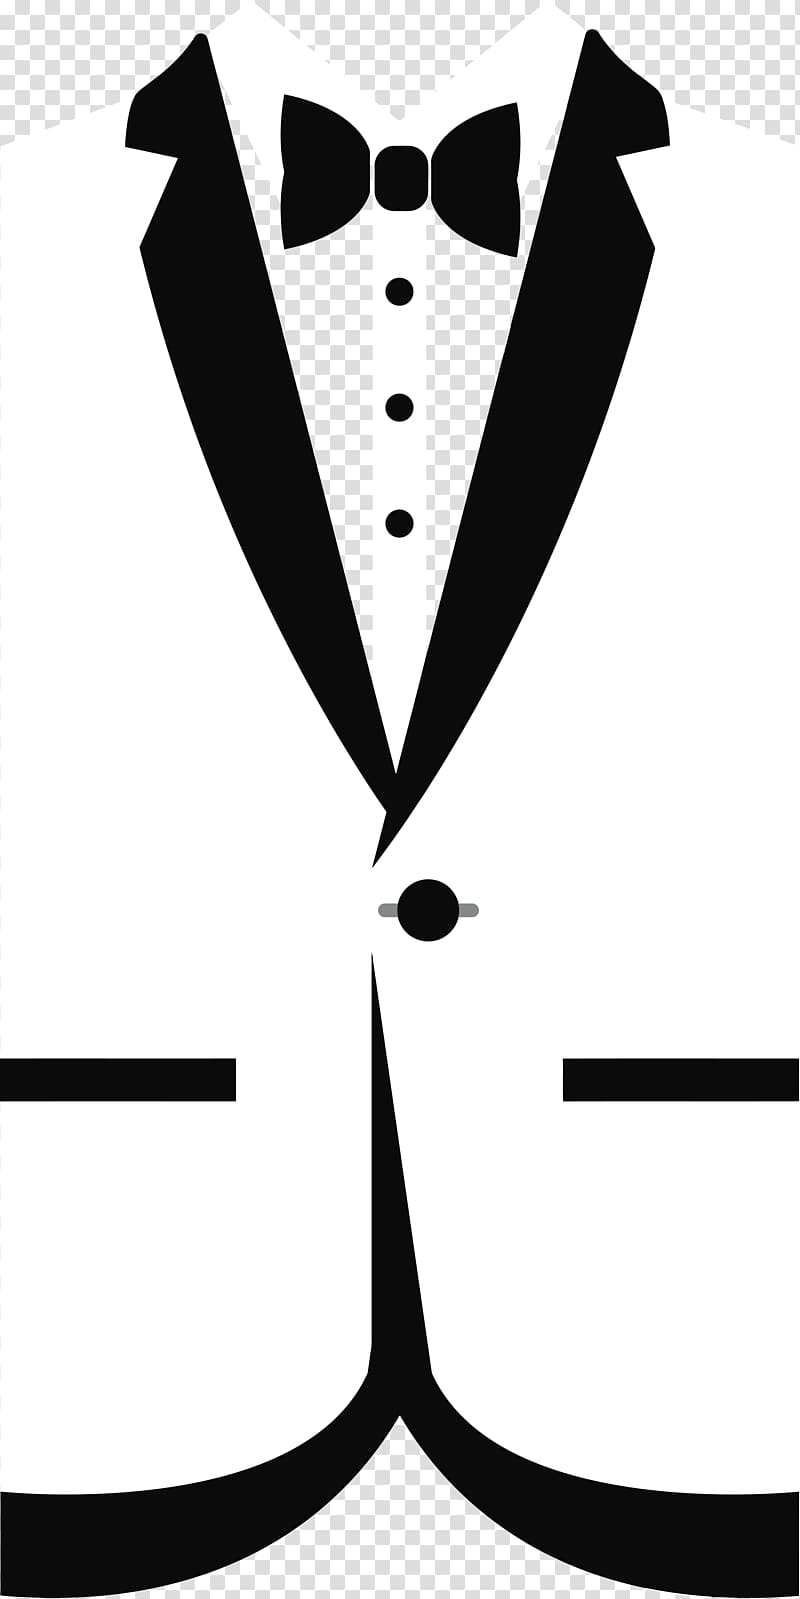 White suit jacket illustration, T.